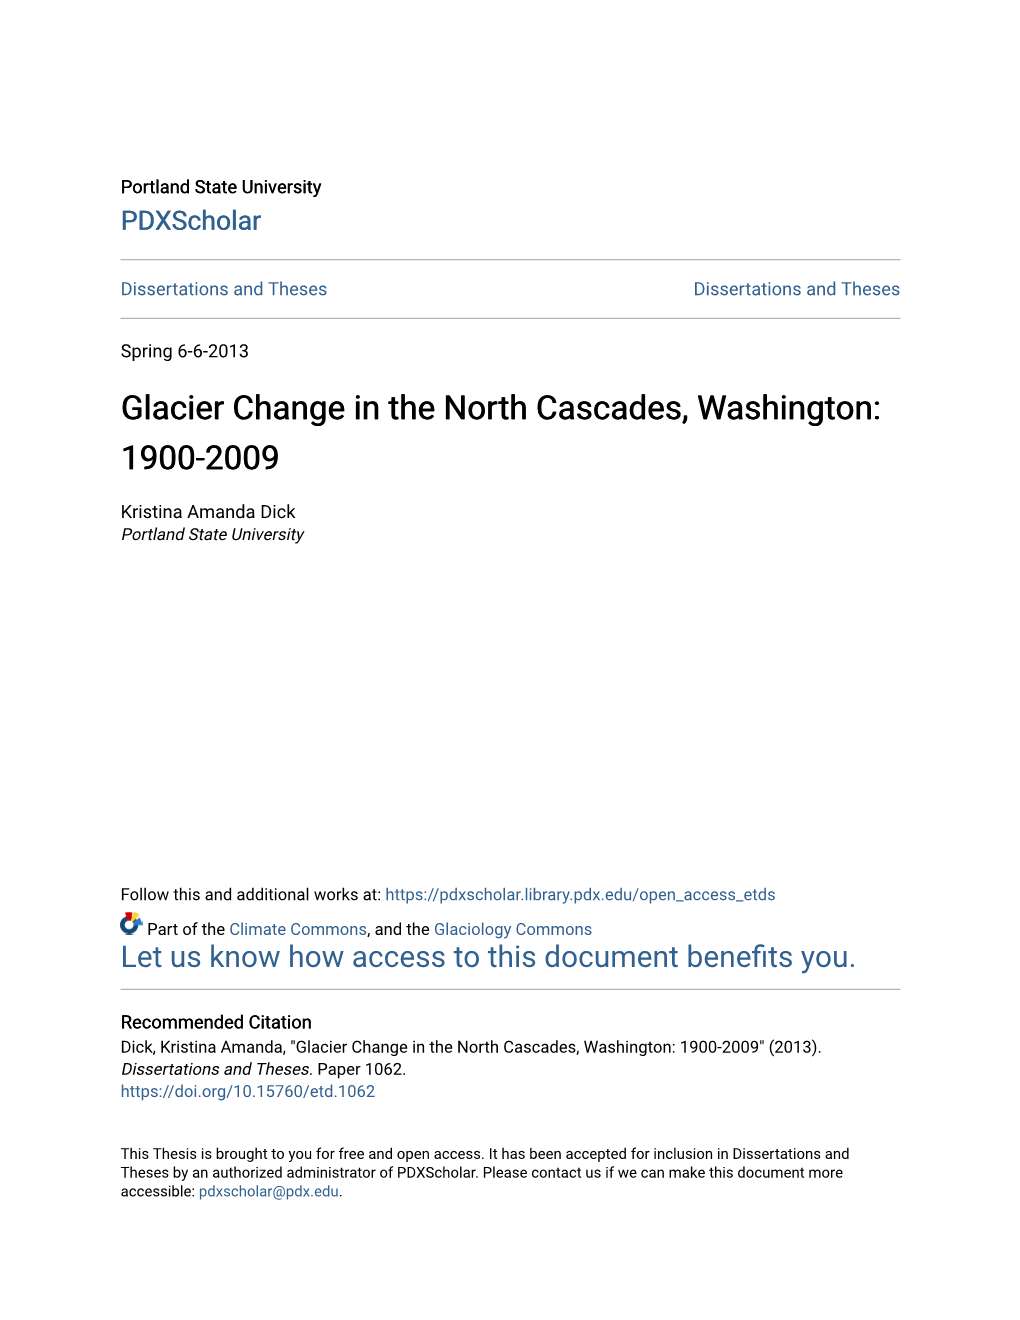 Glacier Change in the North Cascades, Washington: 1900-2009